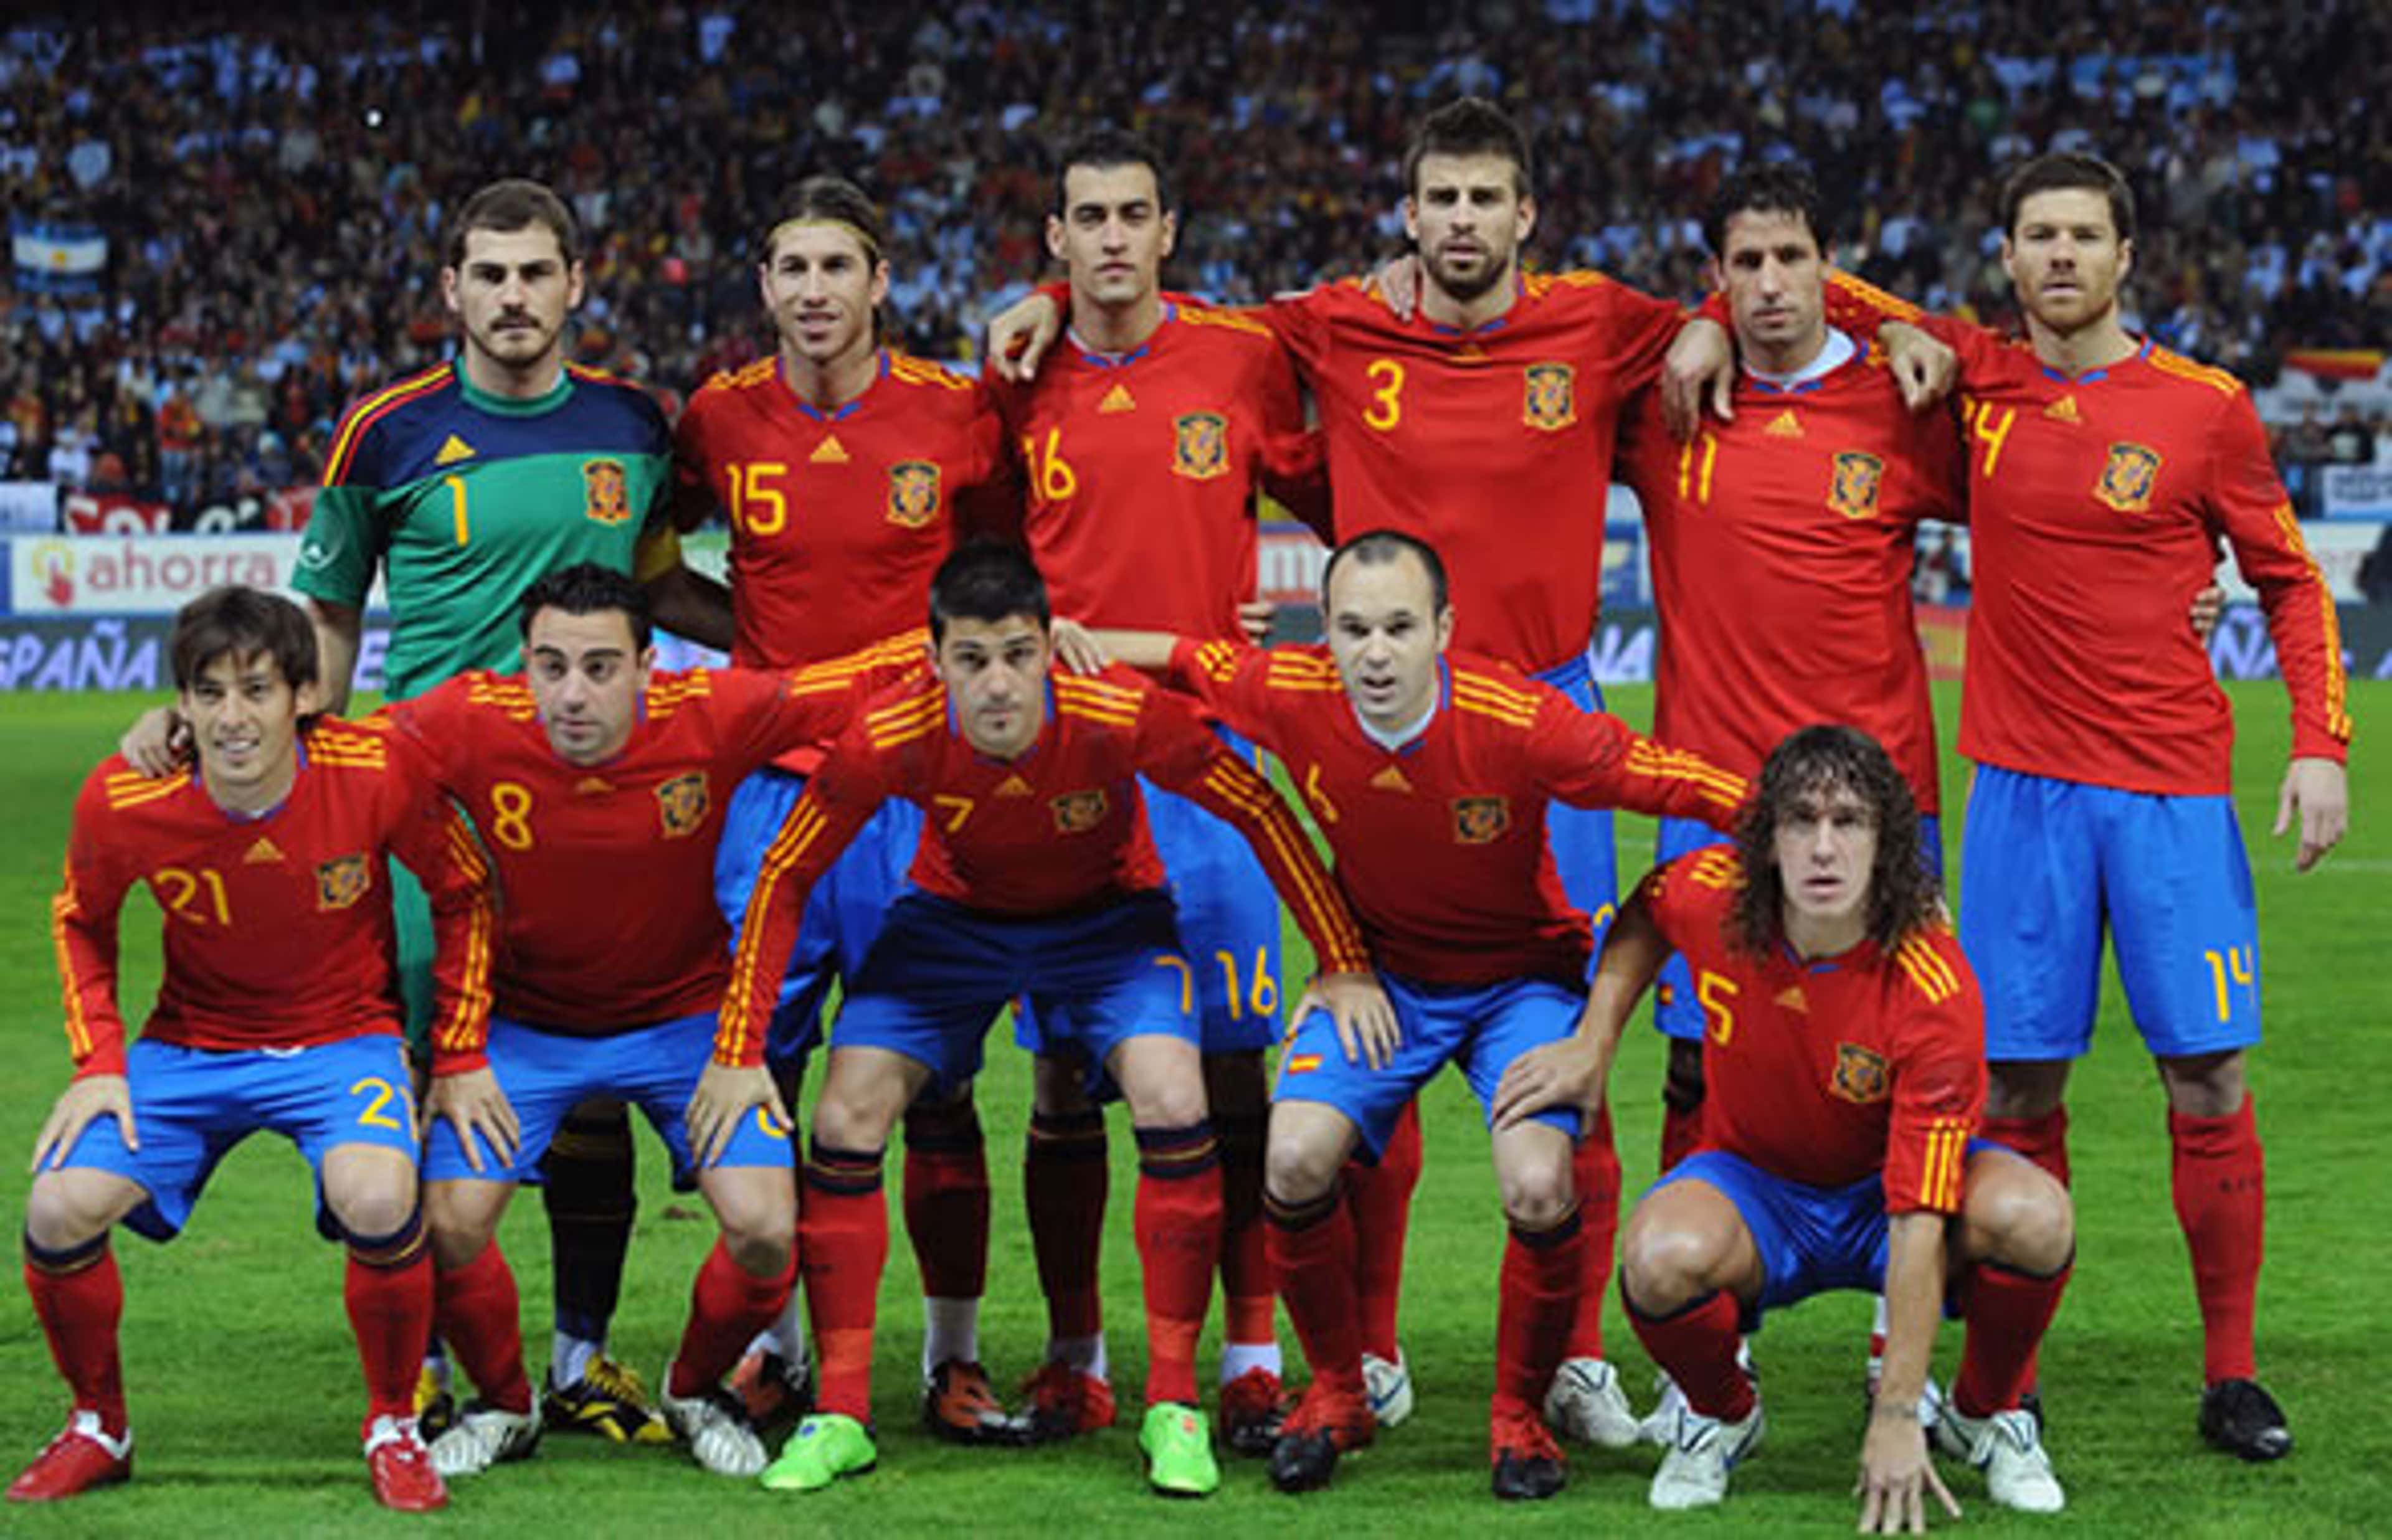 World cup 2010. Сборная Испании 2000 состав. Spain World Cup 2010. World Cup 2010 Spain Squad. Рамос сборная Испании 2010.